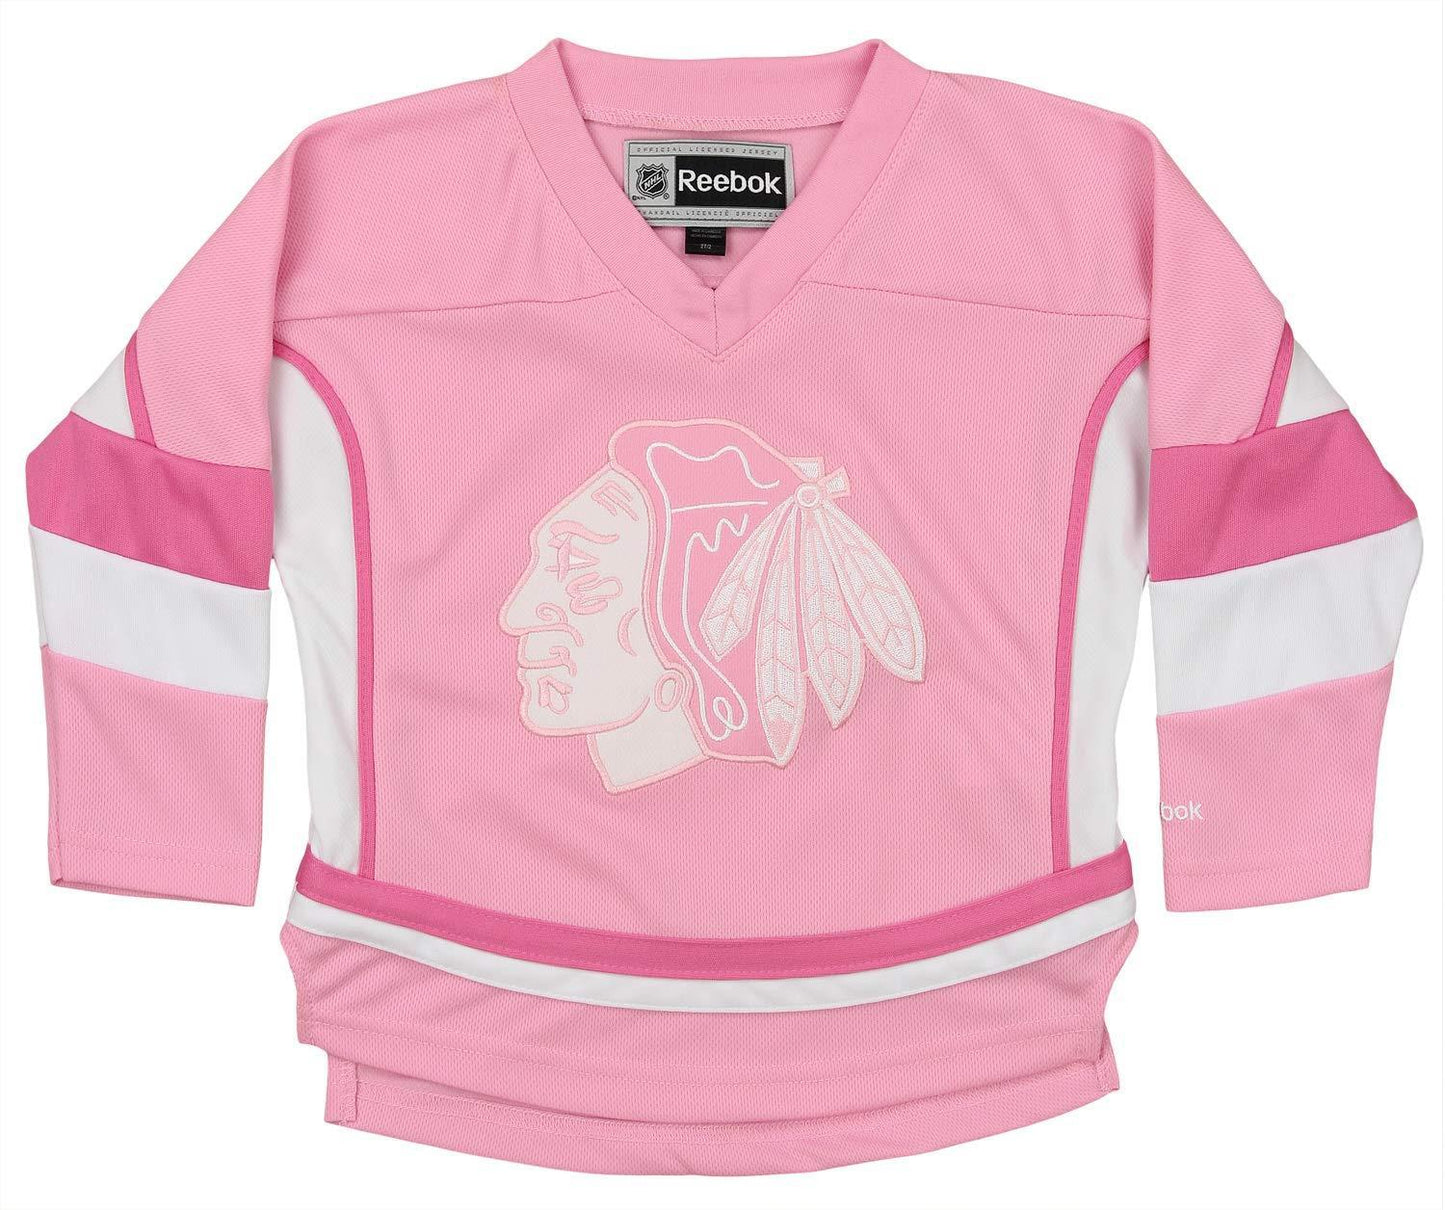 Chicago Blackhawks Patrick Sharp Child Size Pink Child Size Jersey